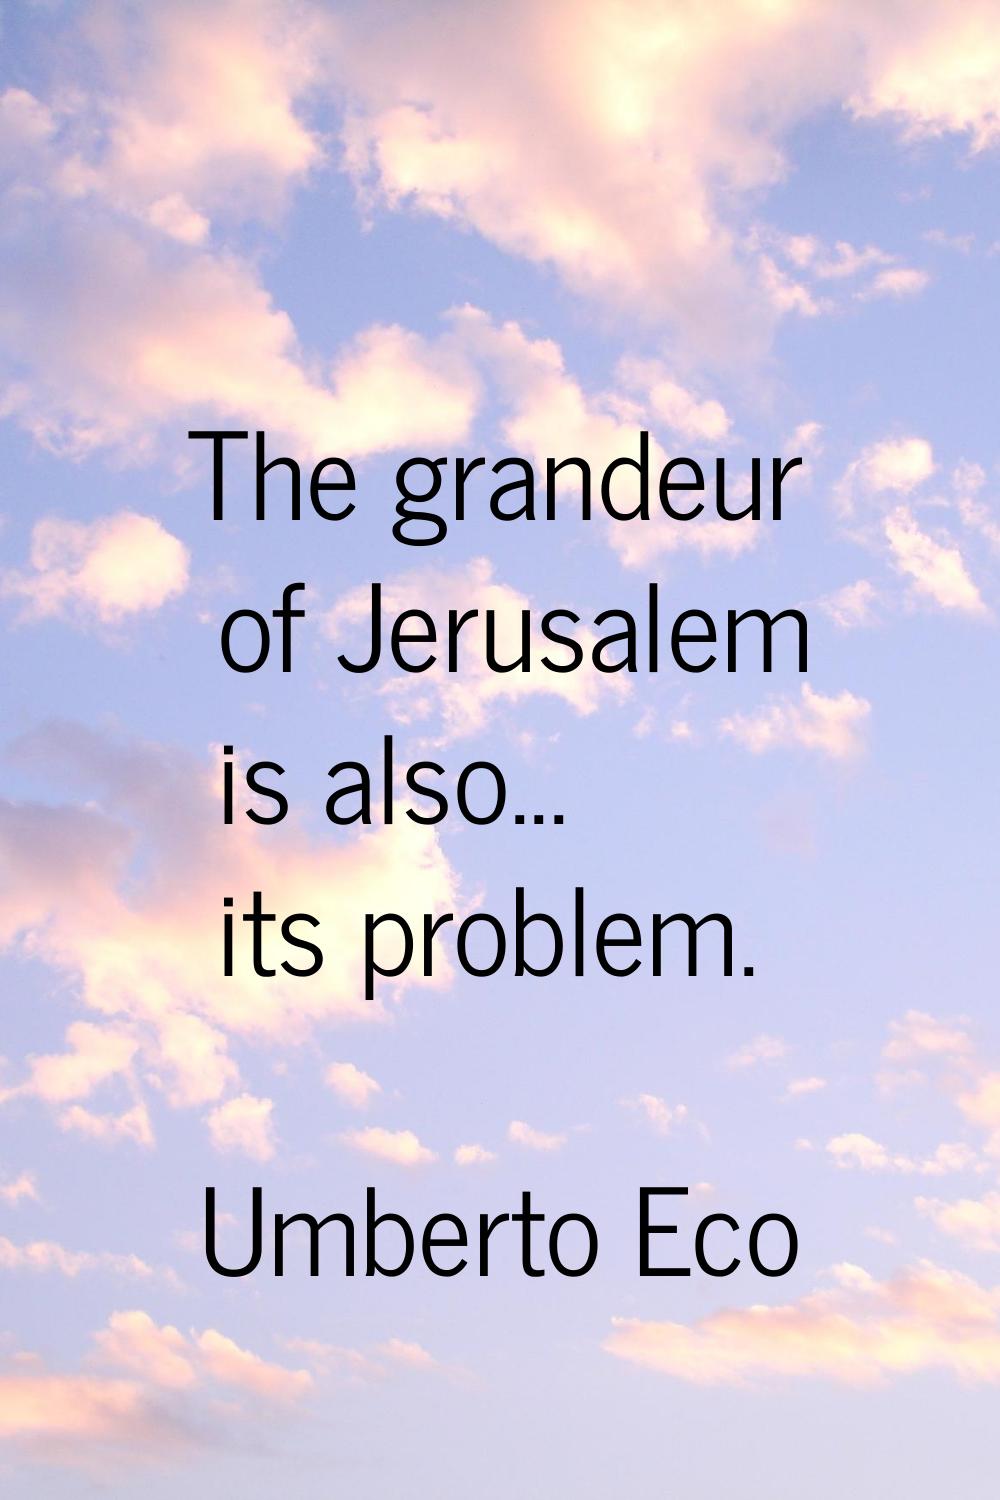 The grandeur of Jerusalem is also... its problem.